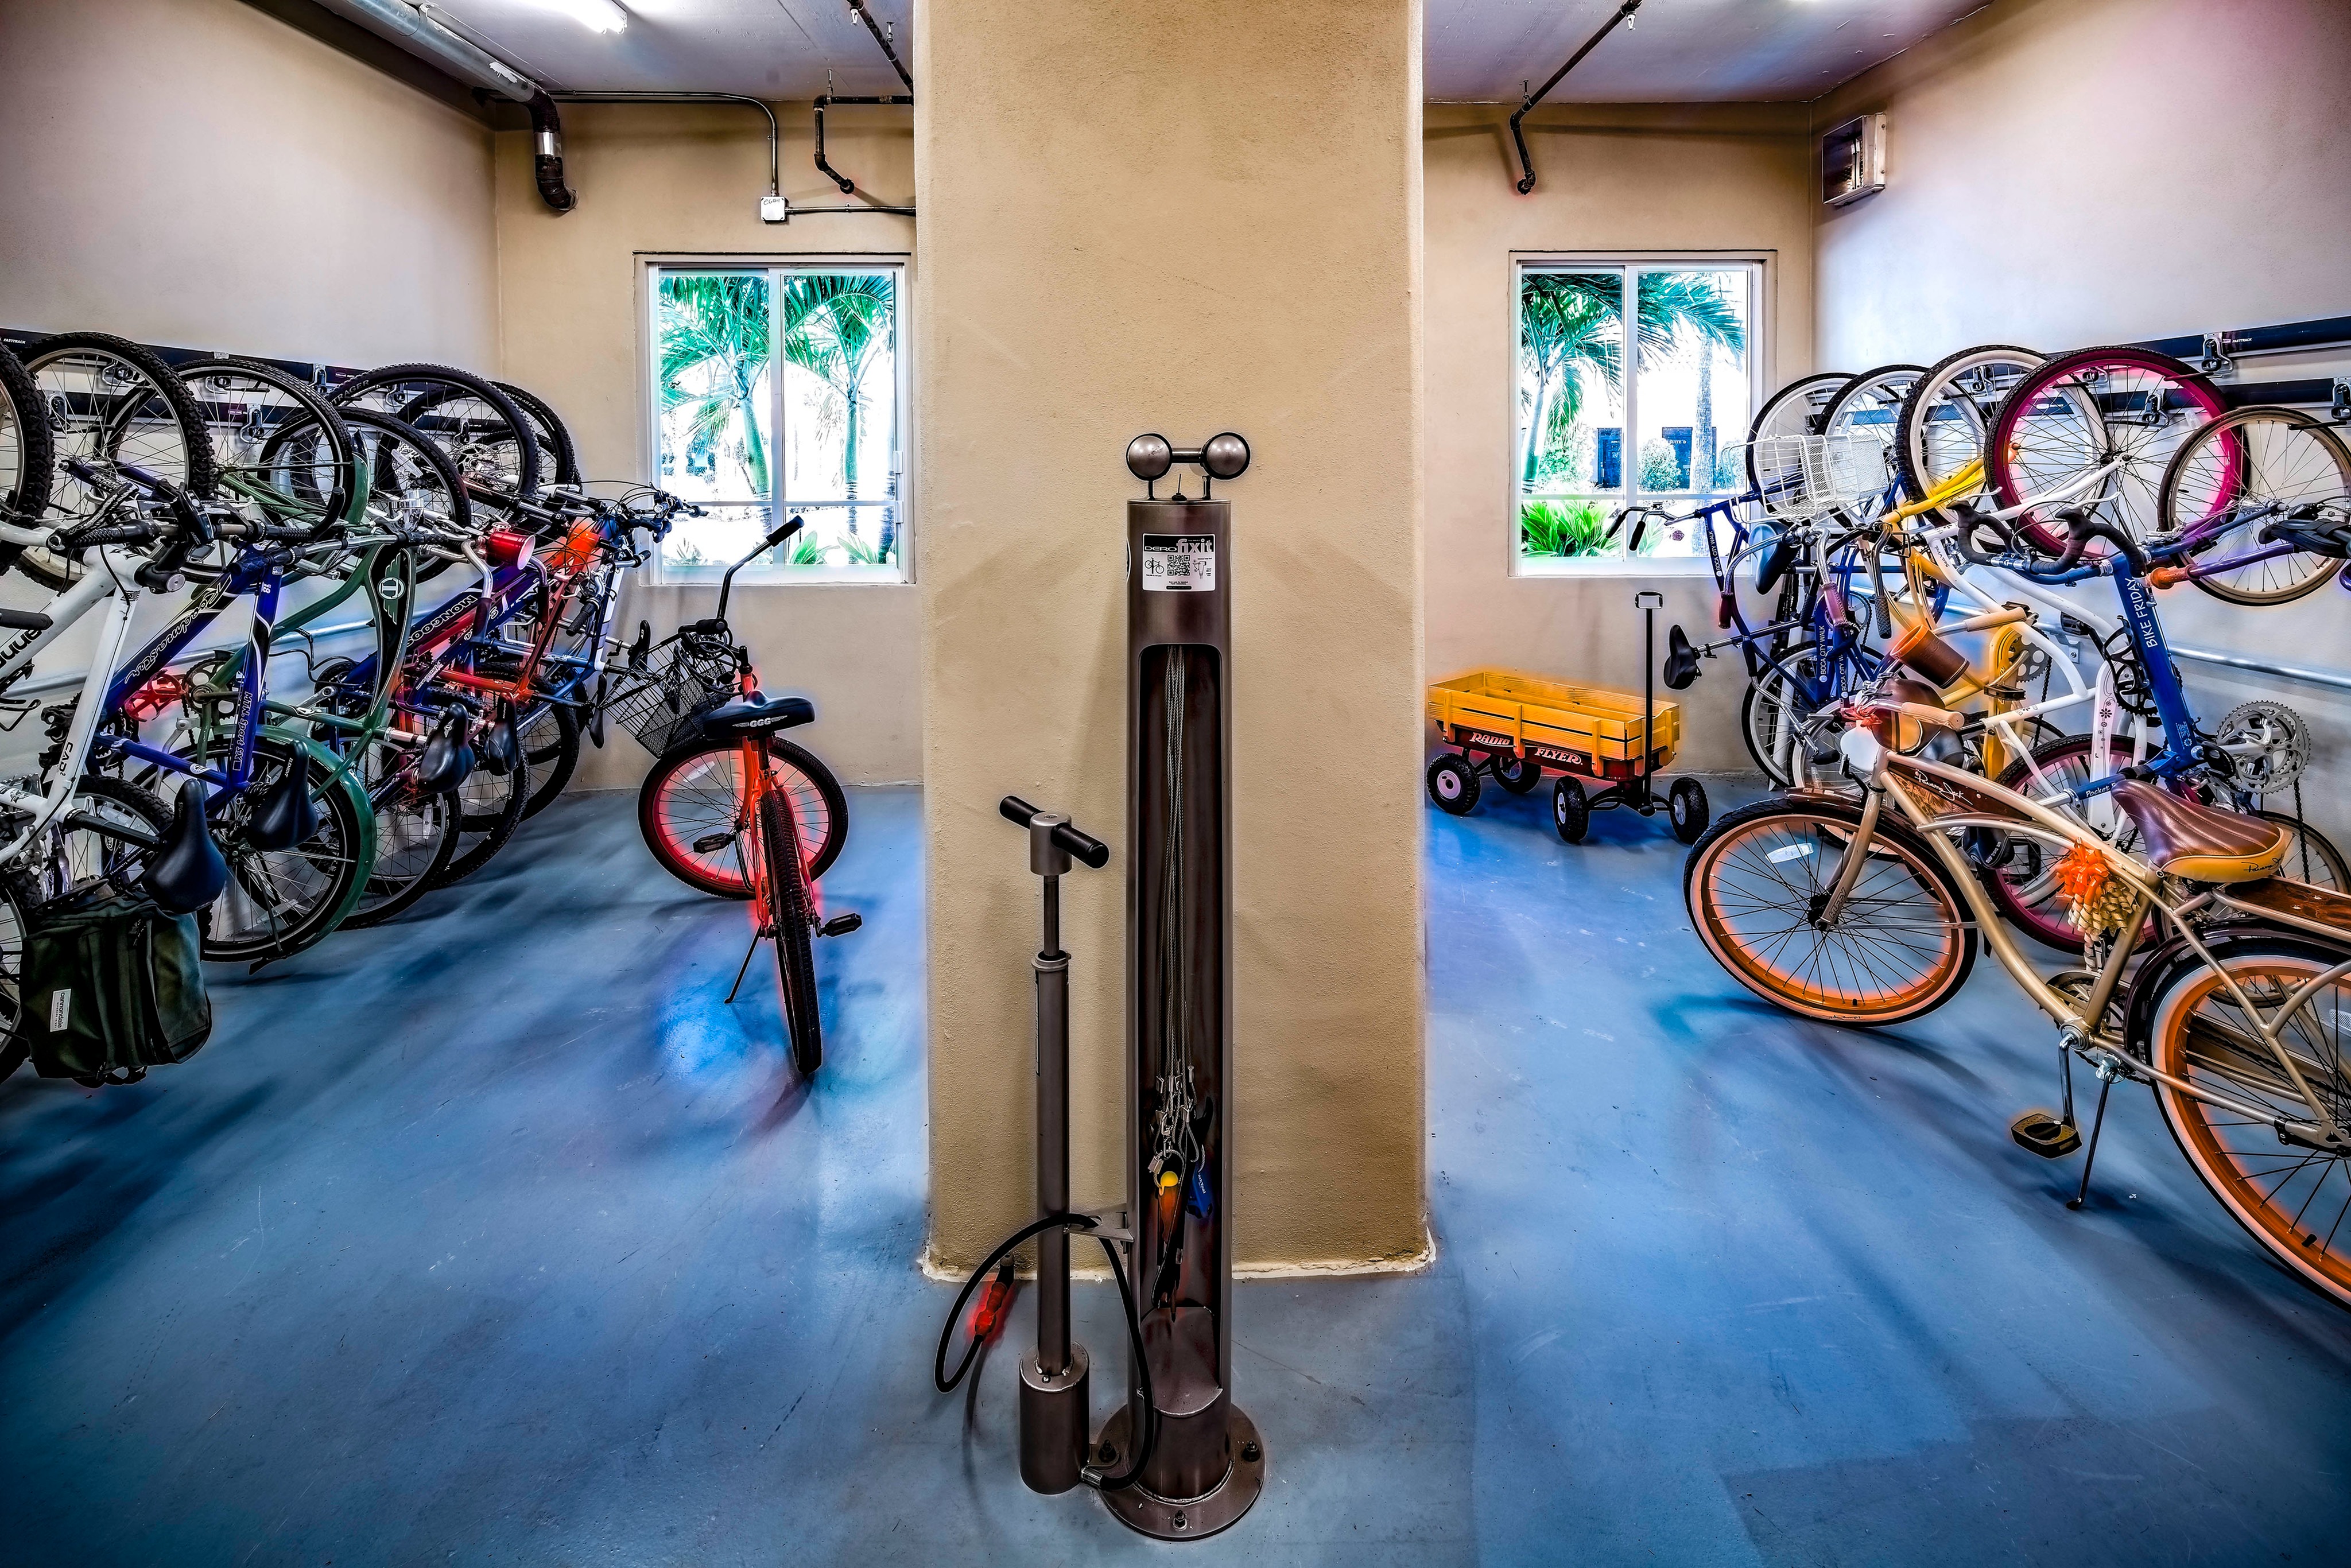 Bicycle storage and repair station